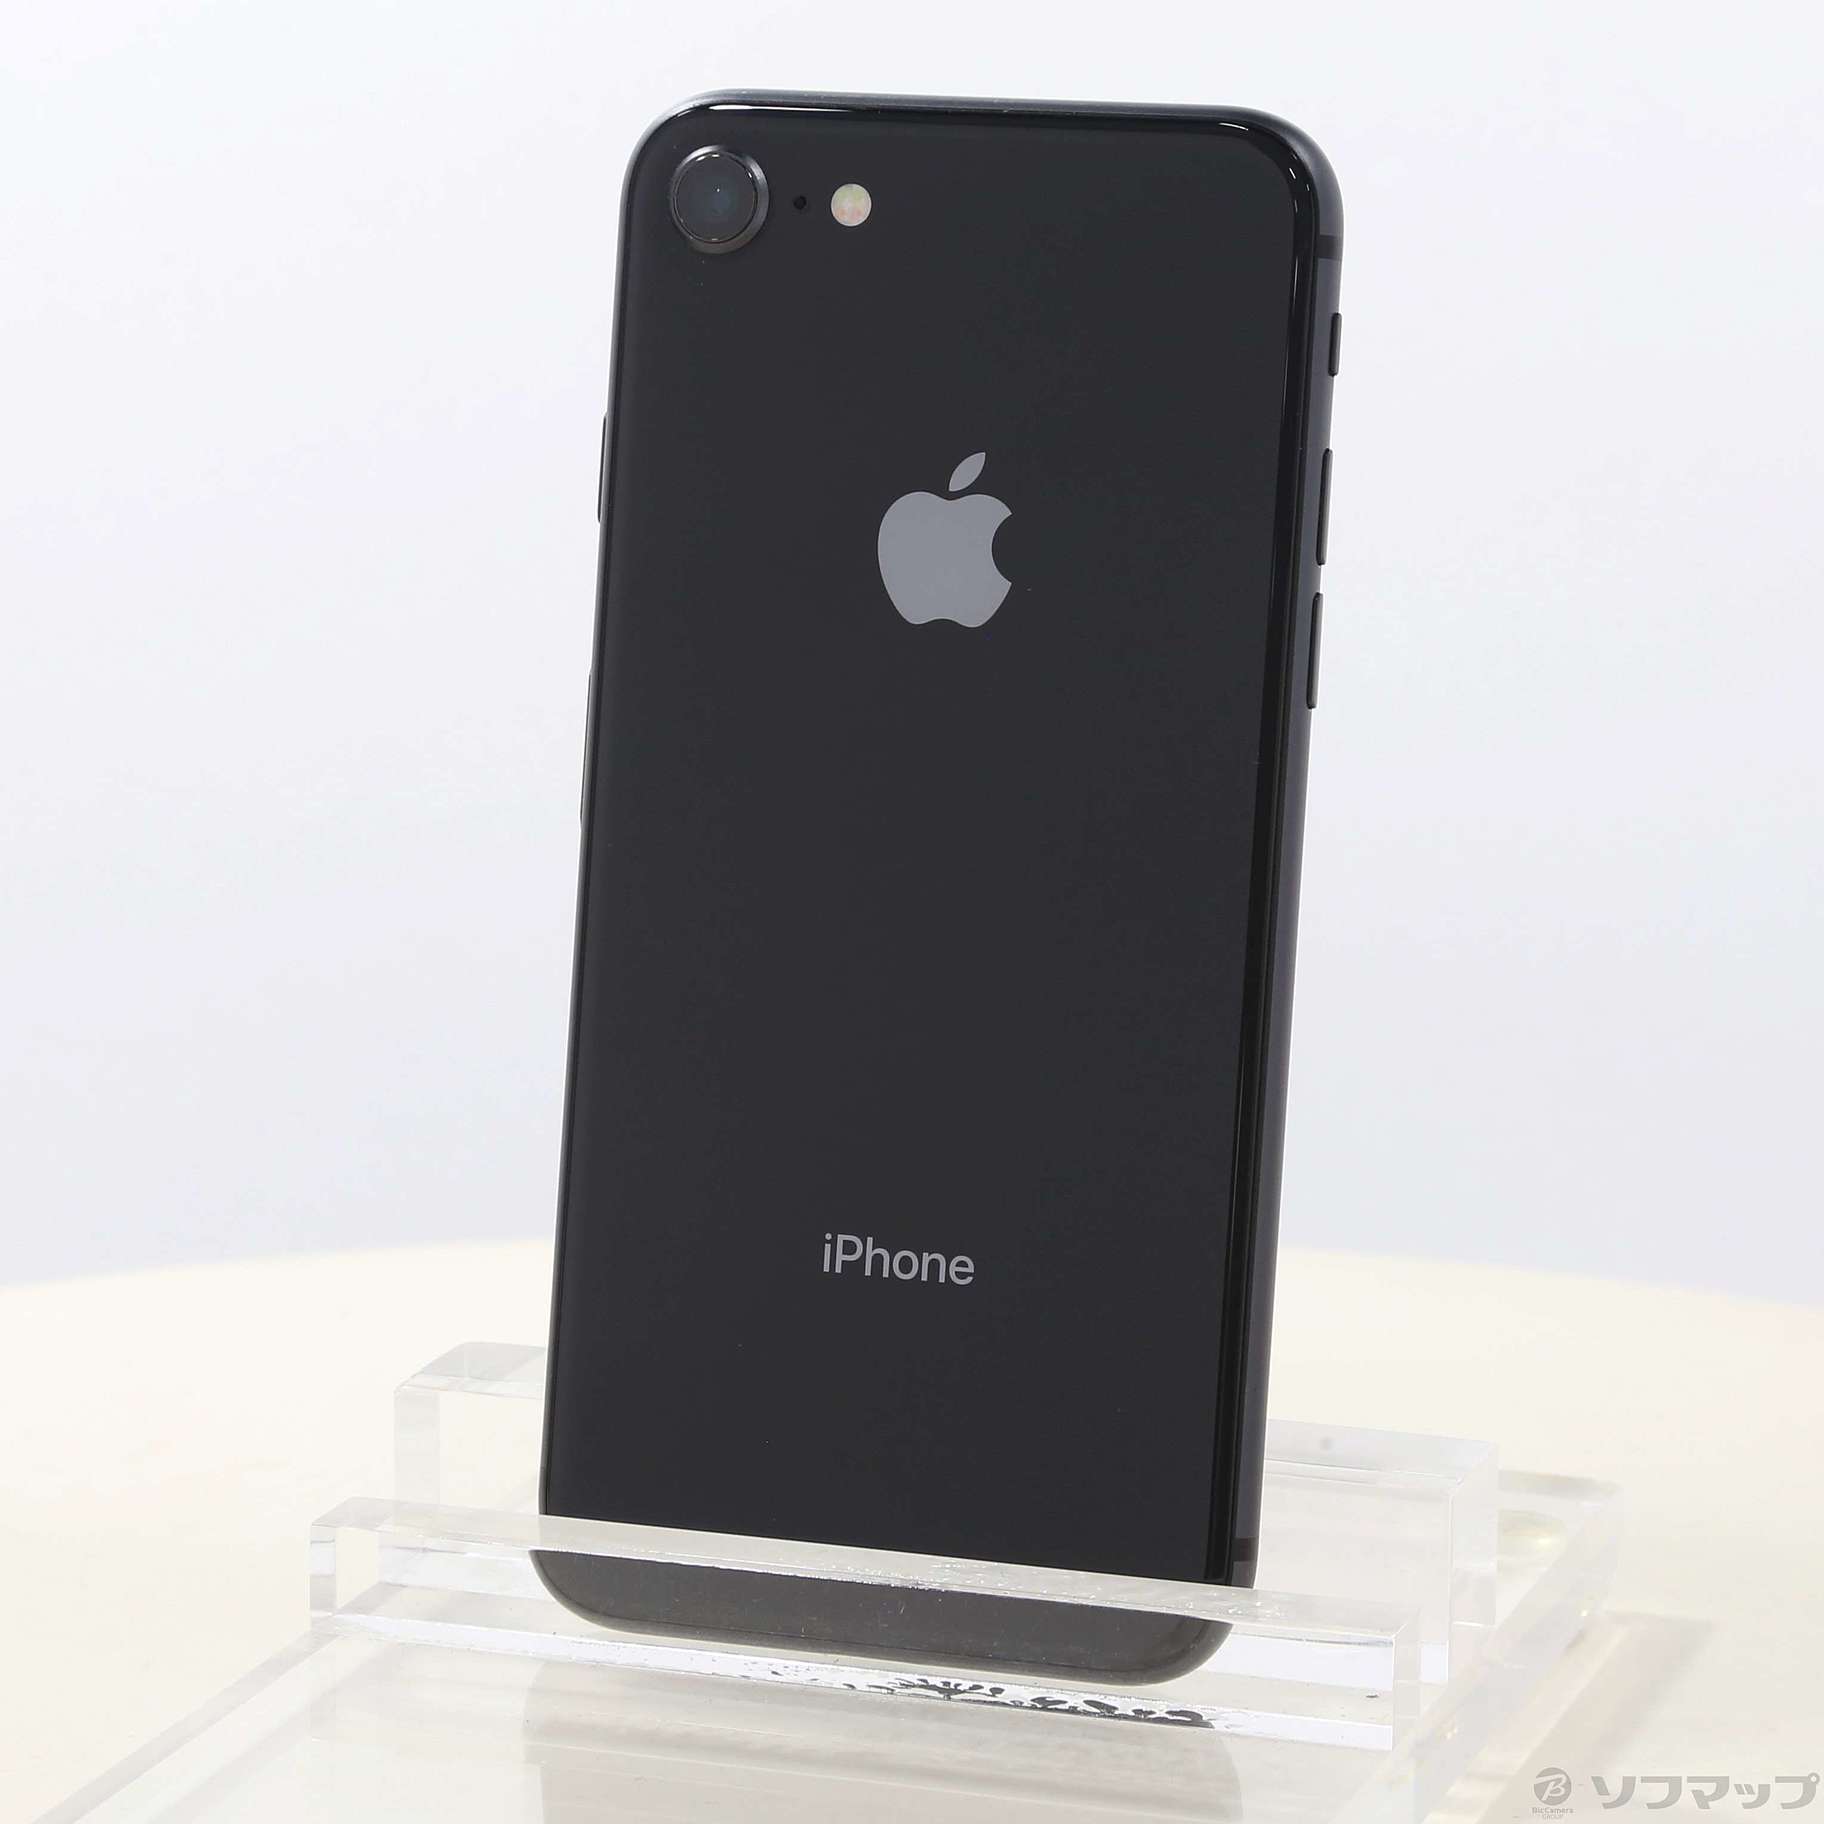 iPhone 8 Space Gray 64GB SIMフリー 本体 _1110